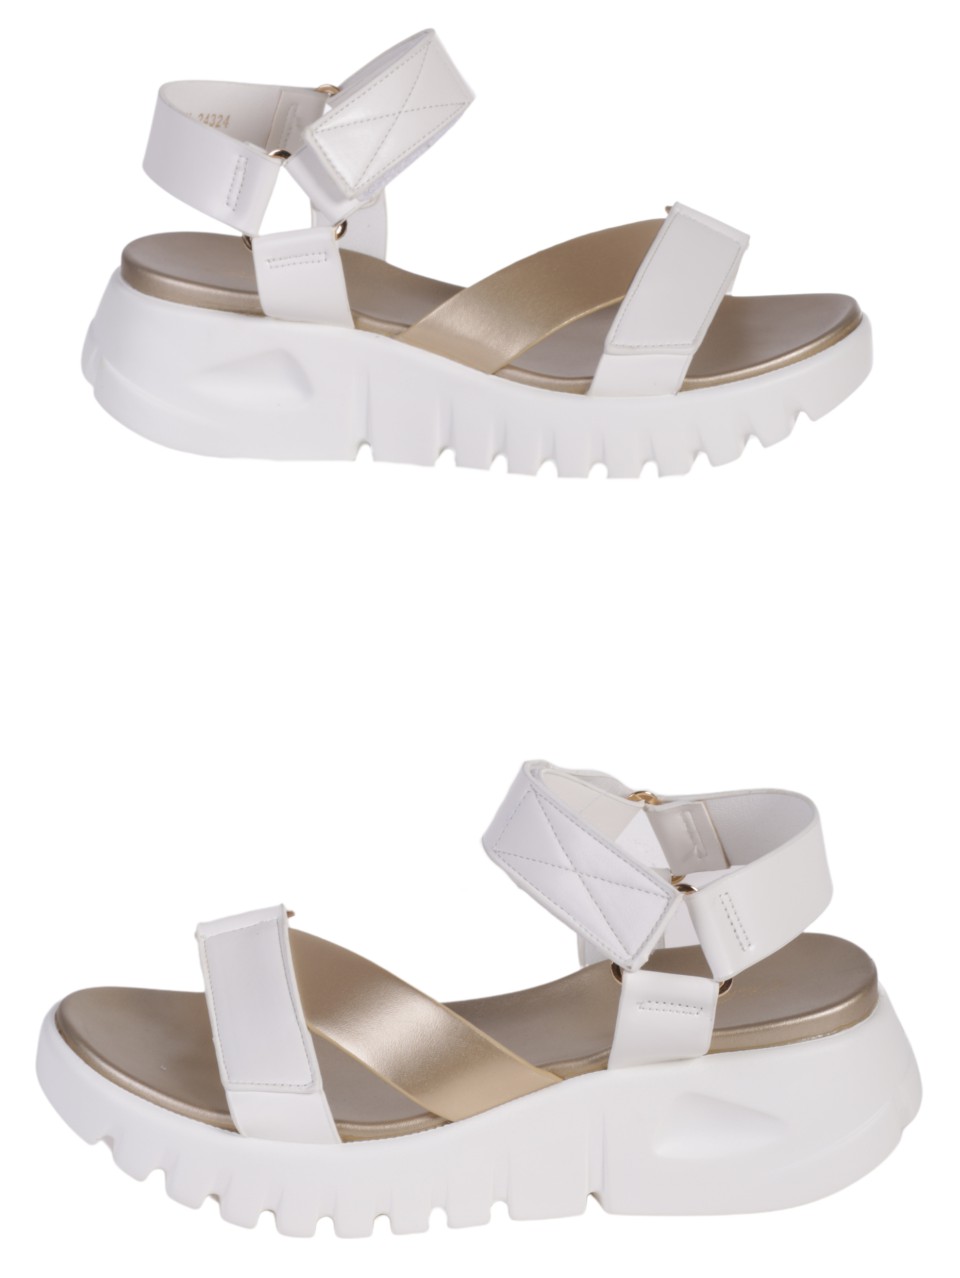 Ежедневни дамски сандали на платформа в бял/златист цвят 4H-24324 white/gold